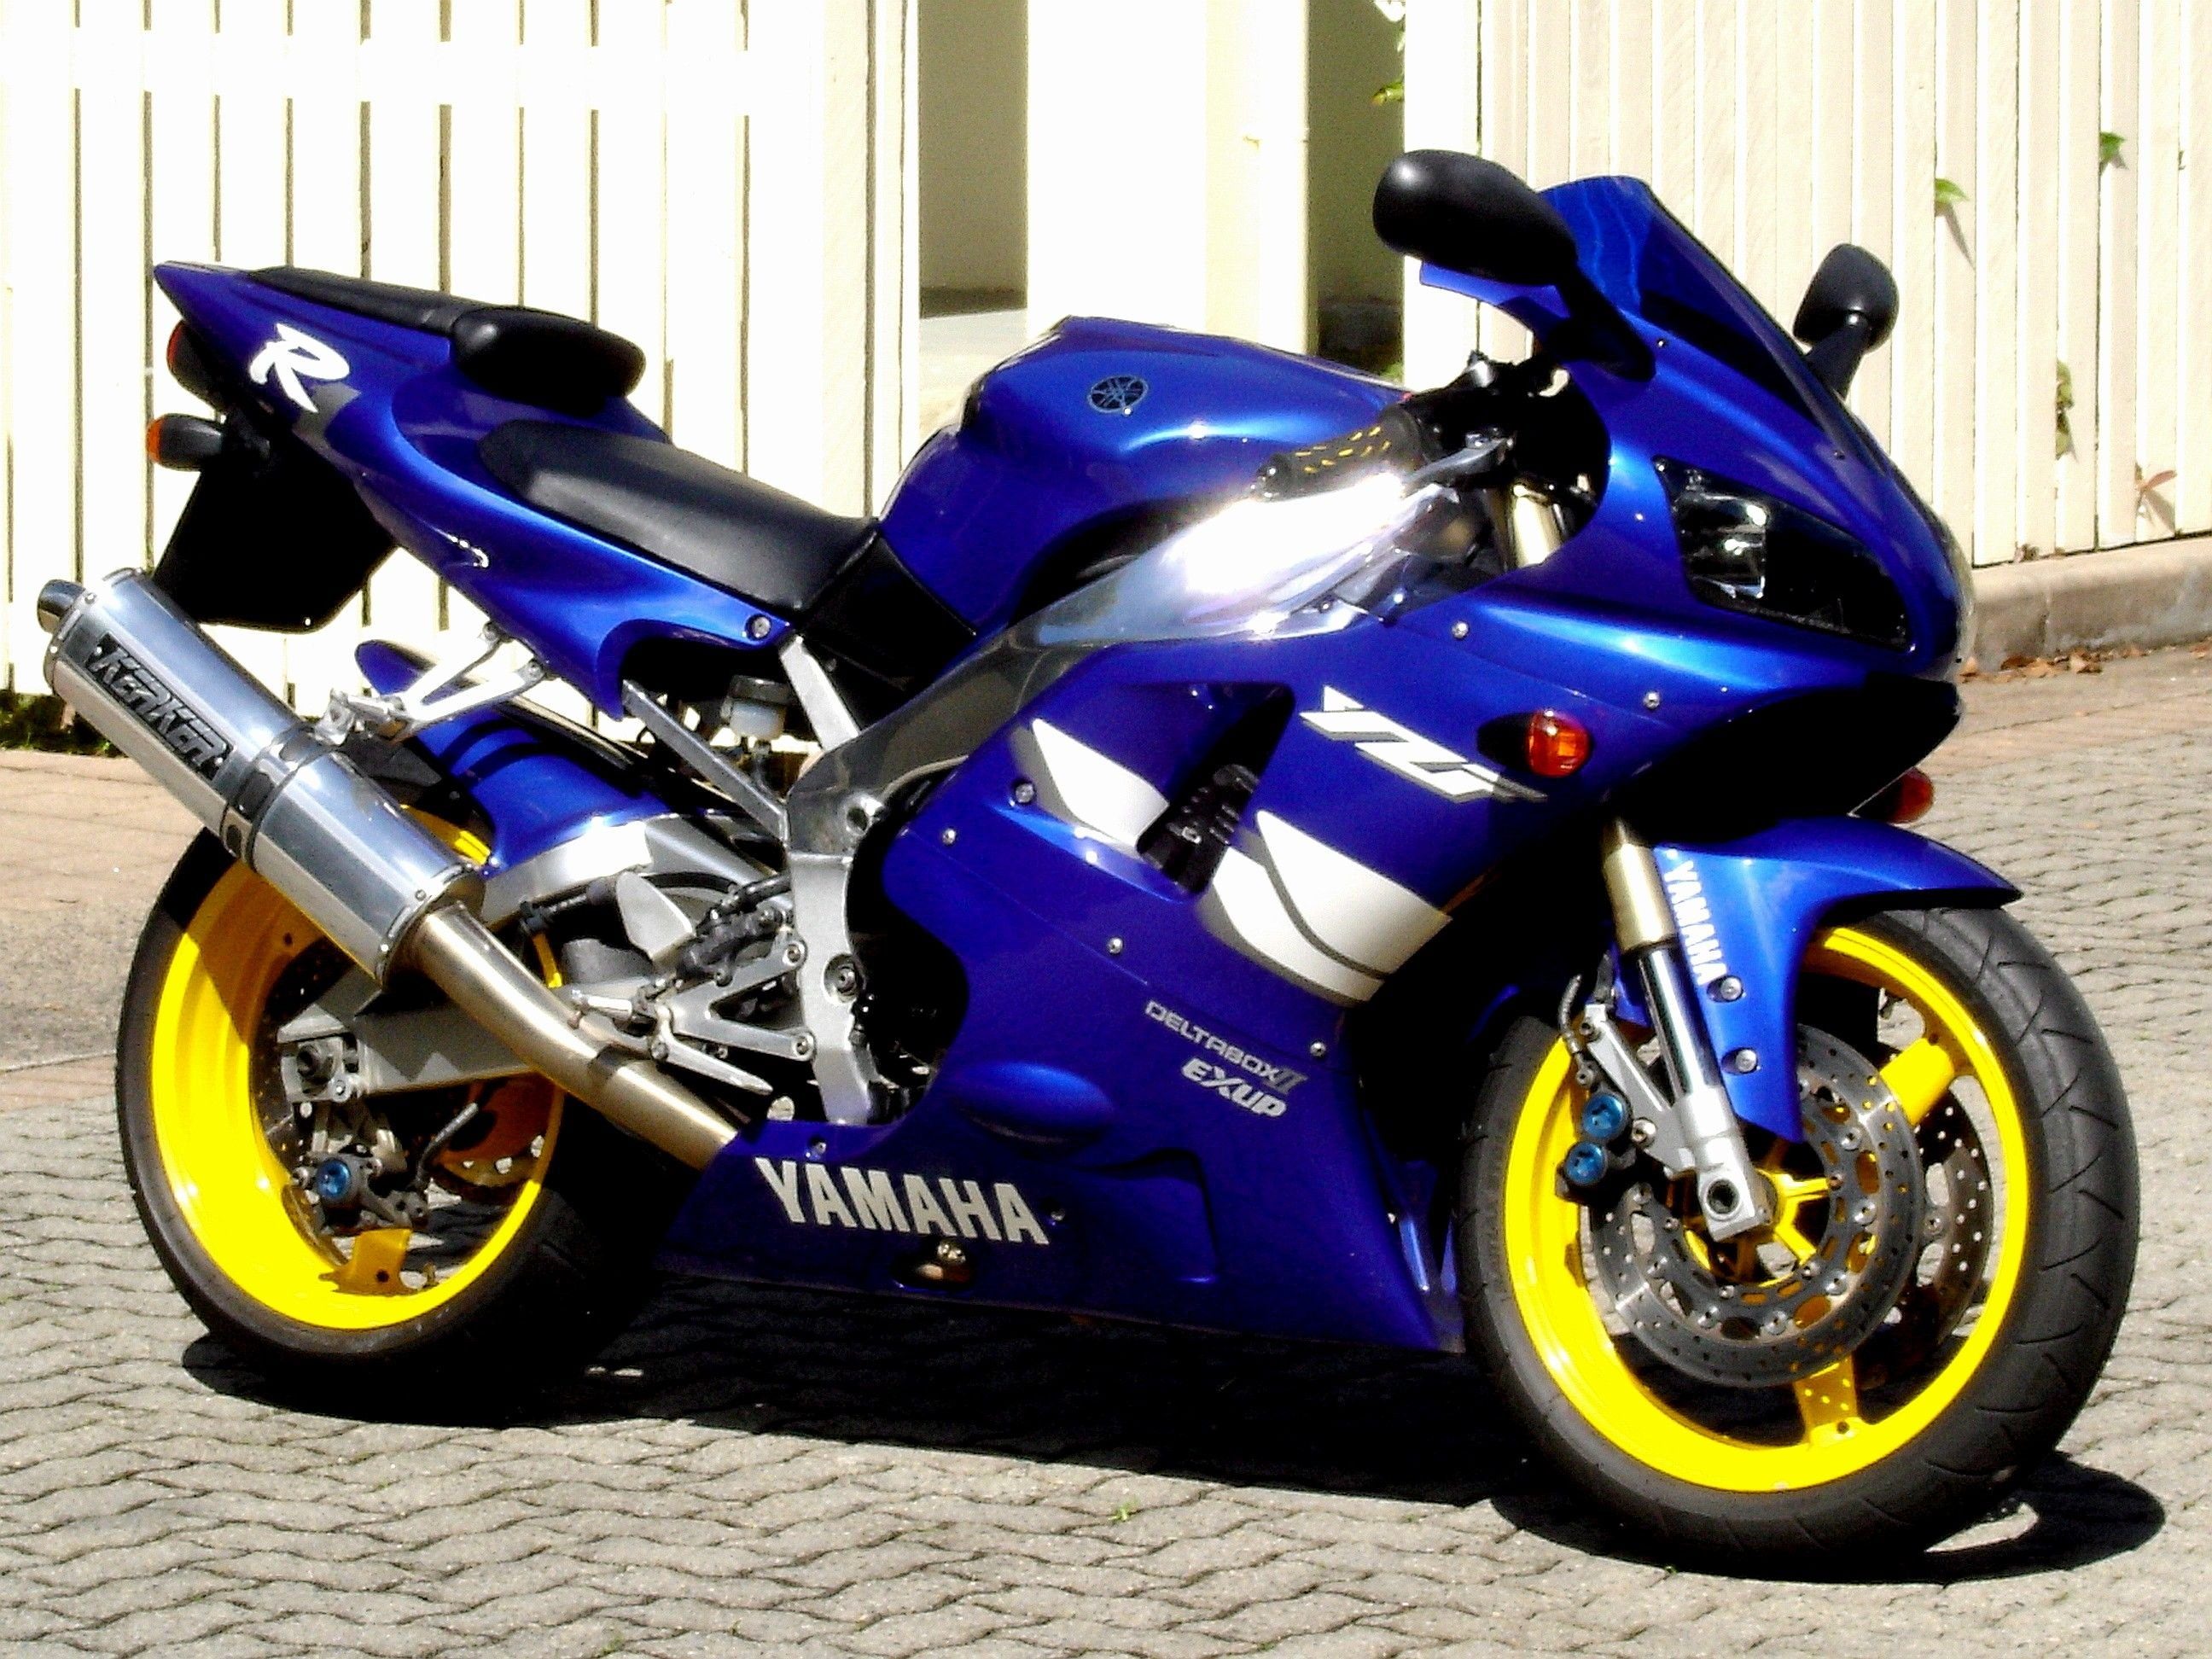 Yamaha r1. Yamaha YZF-r1 2000. Ямаха r1 1999. Yamaha r1 Золотая. Включи байки синие